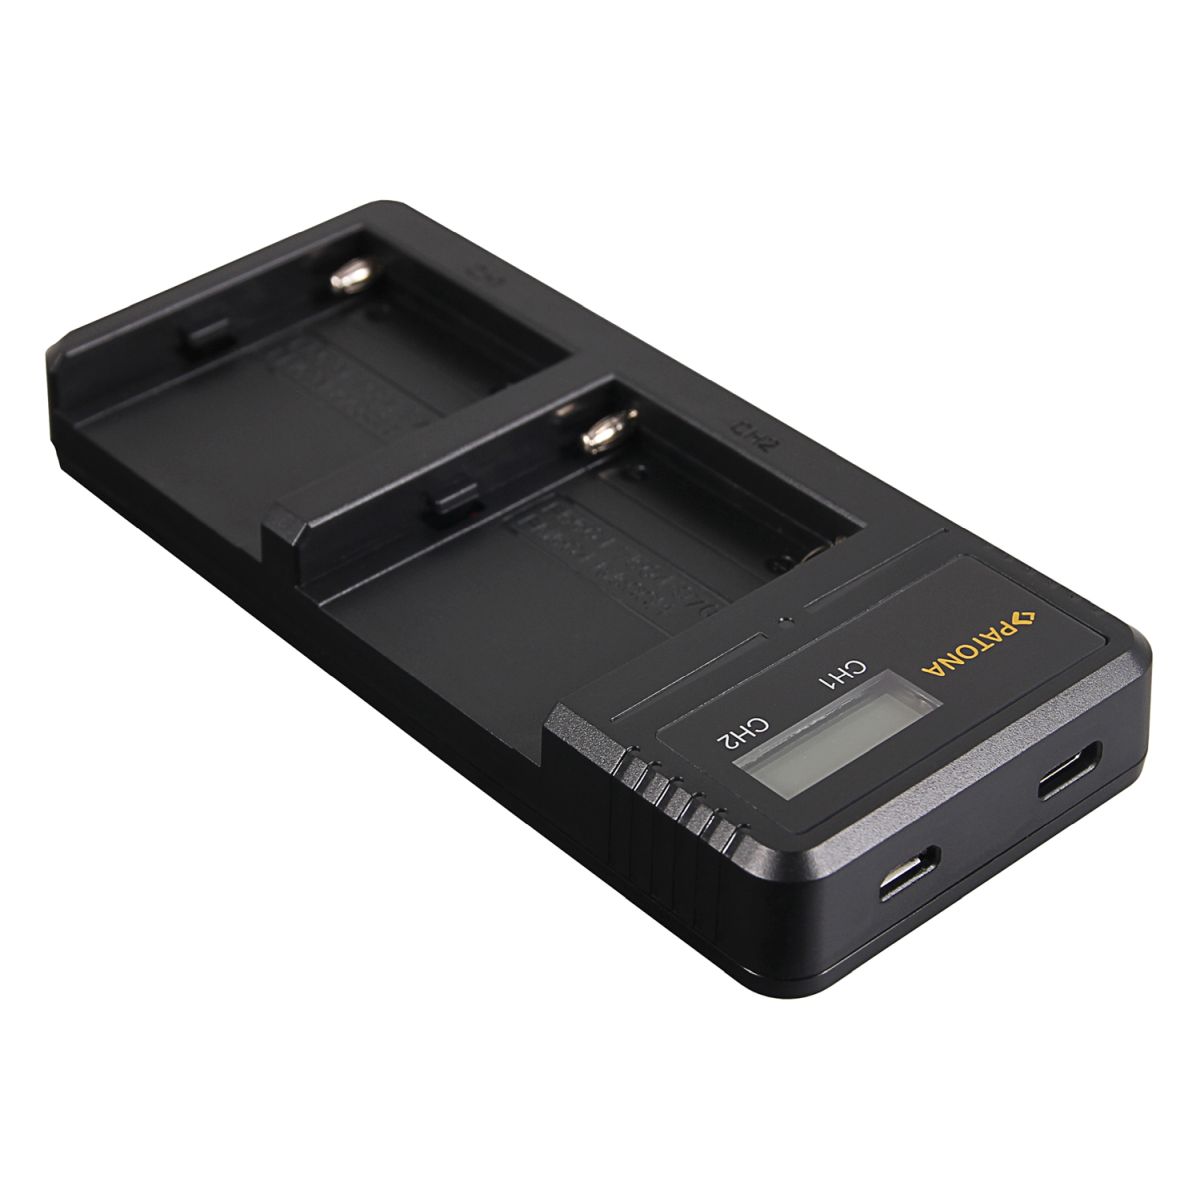 Patona Dual LCD USB Ladegerät Sony NP-F 550